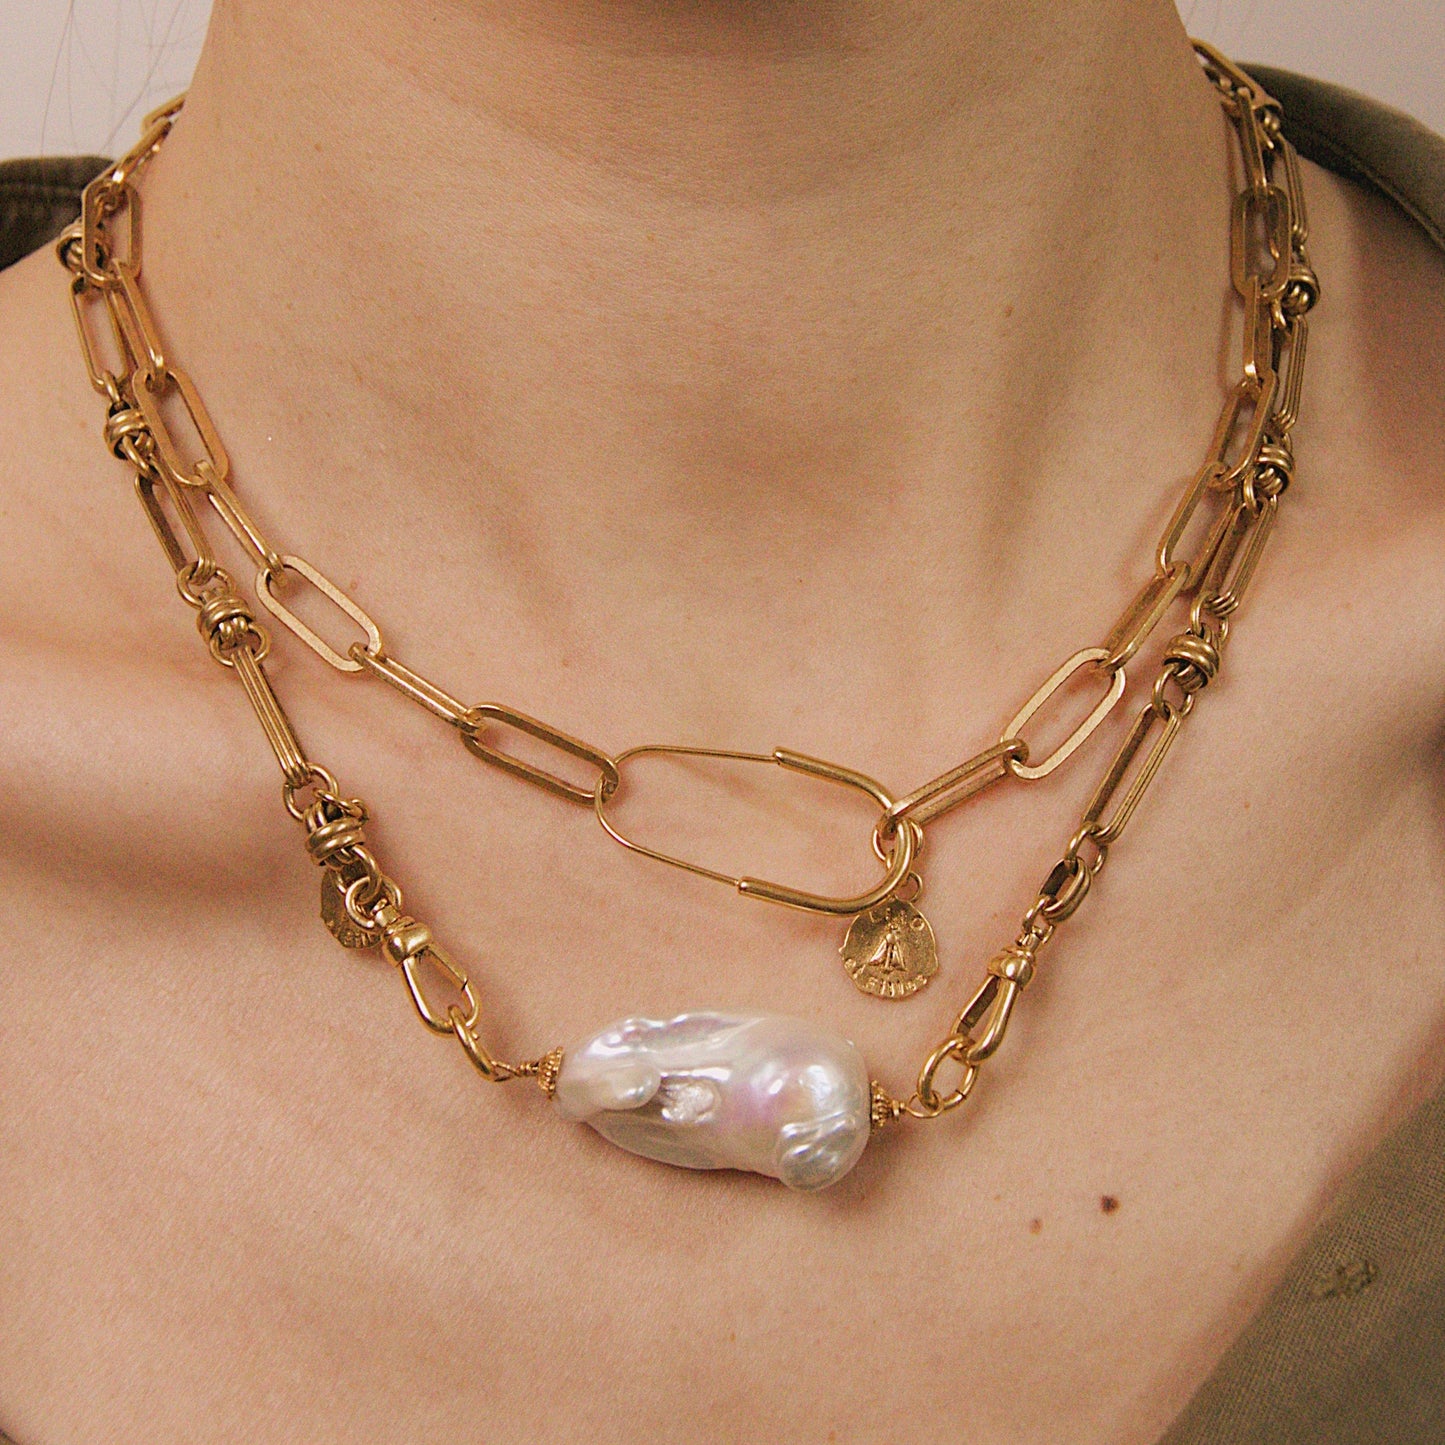 Clara safety pin necklace